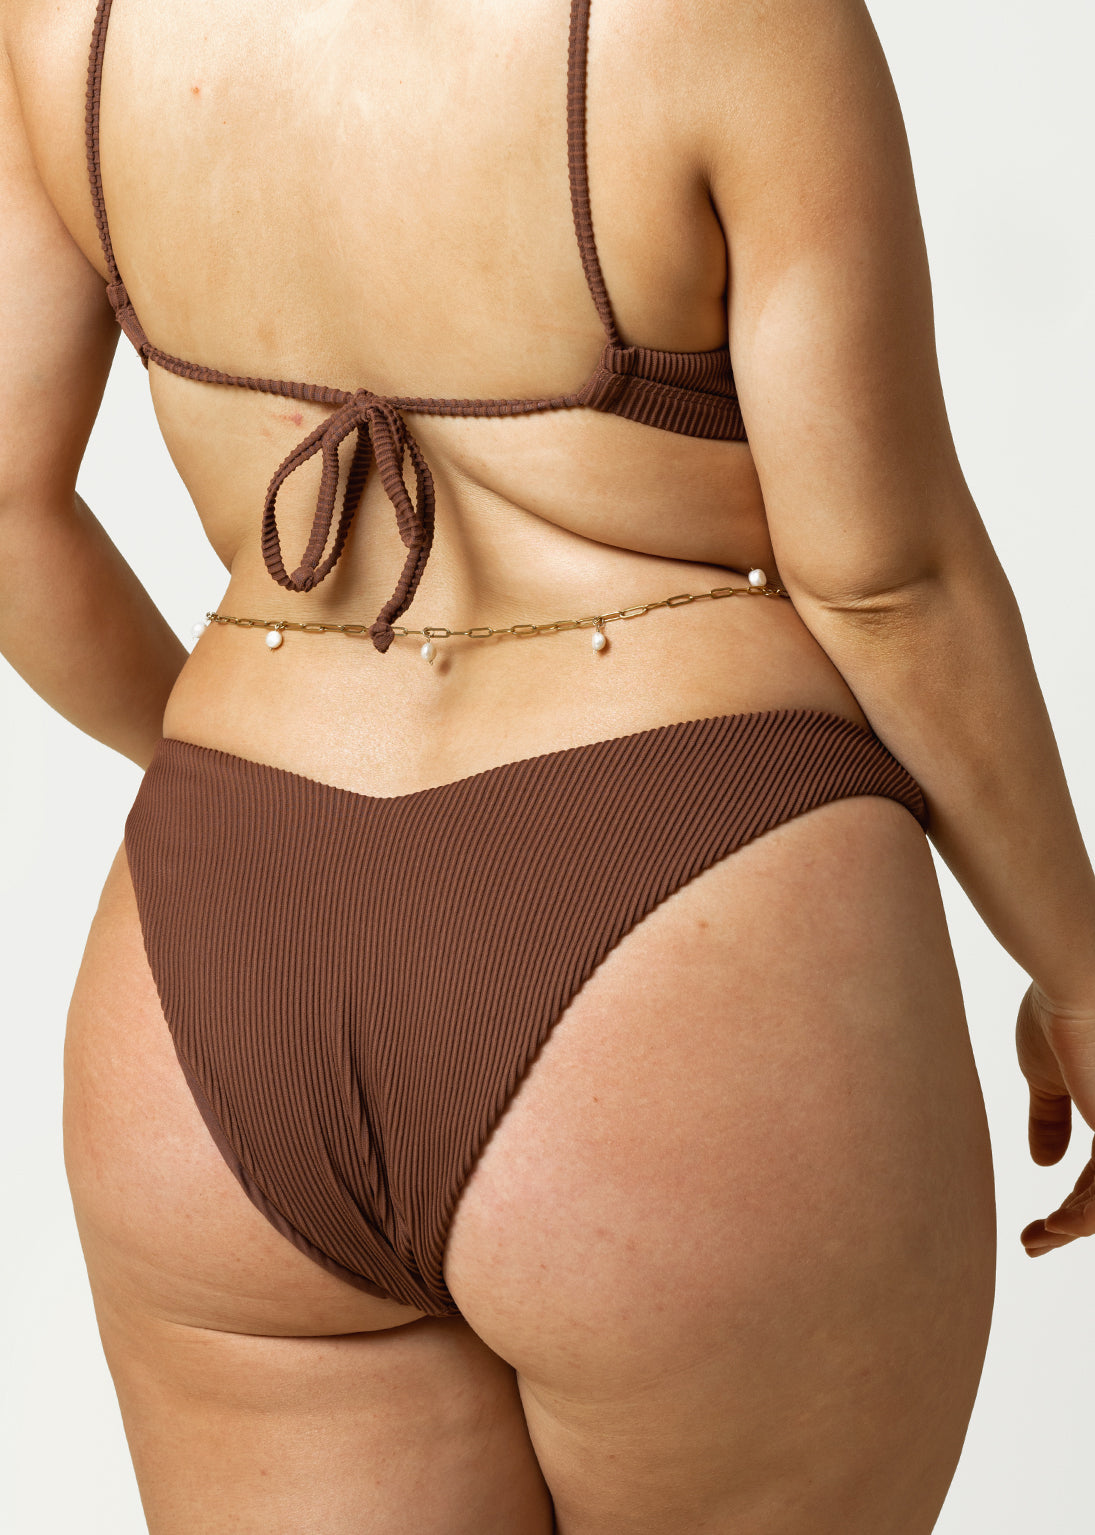 curby woman wears the cheeky bikini bottom in brown